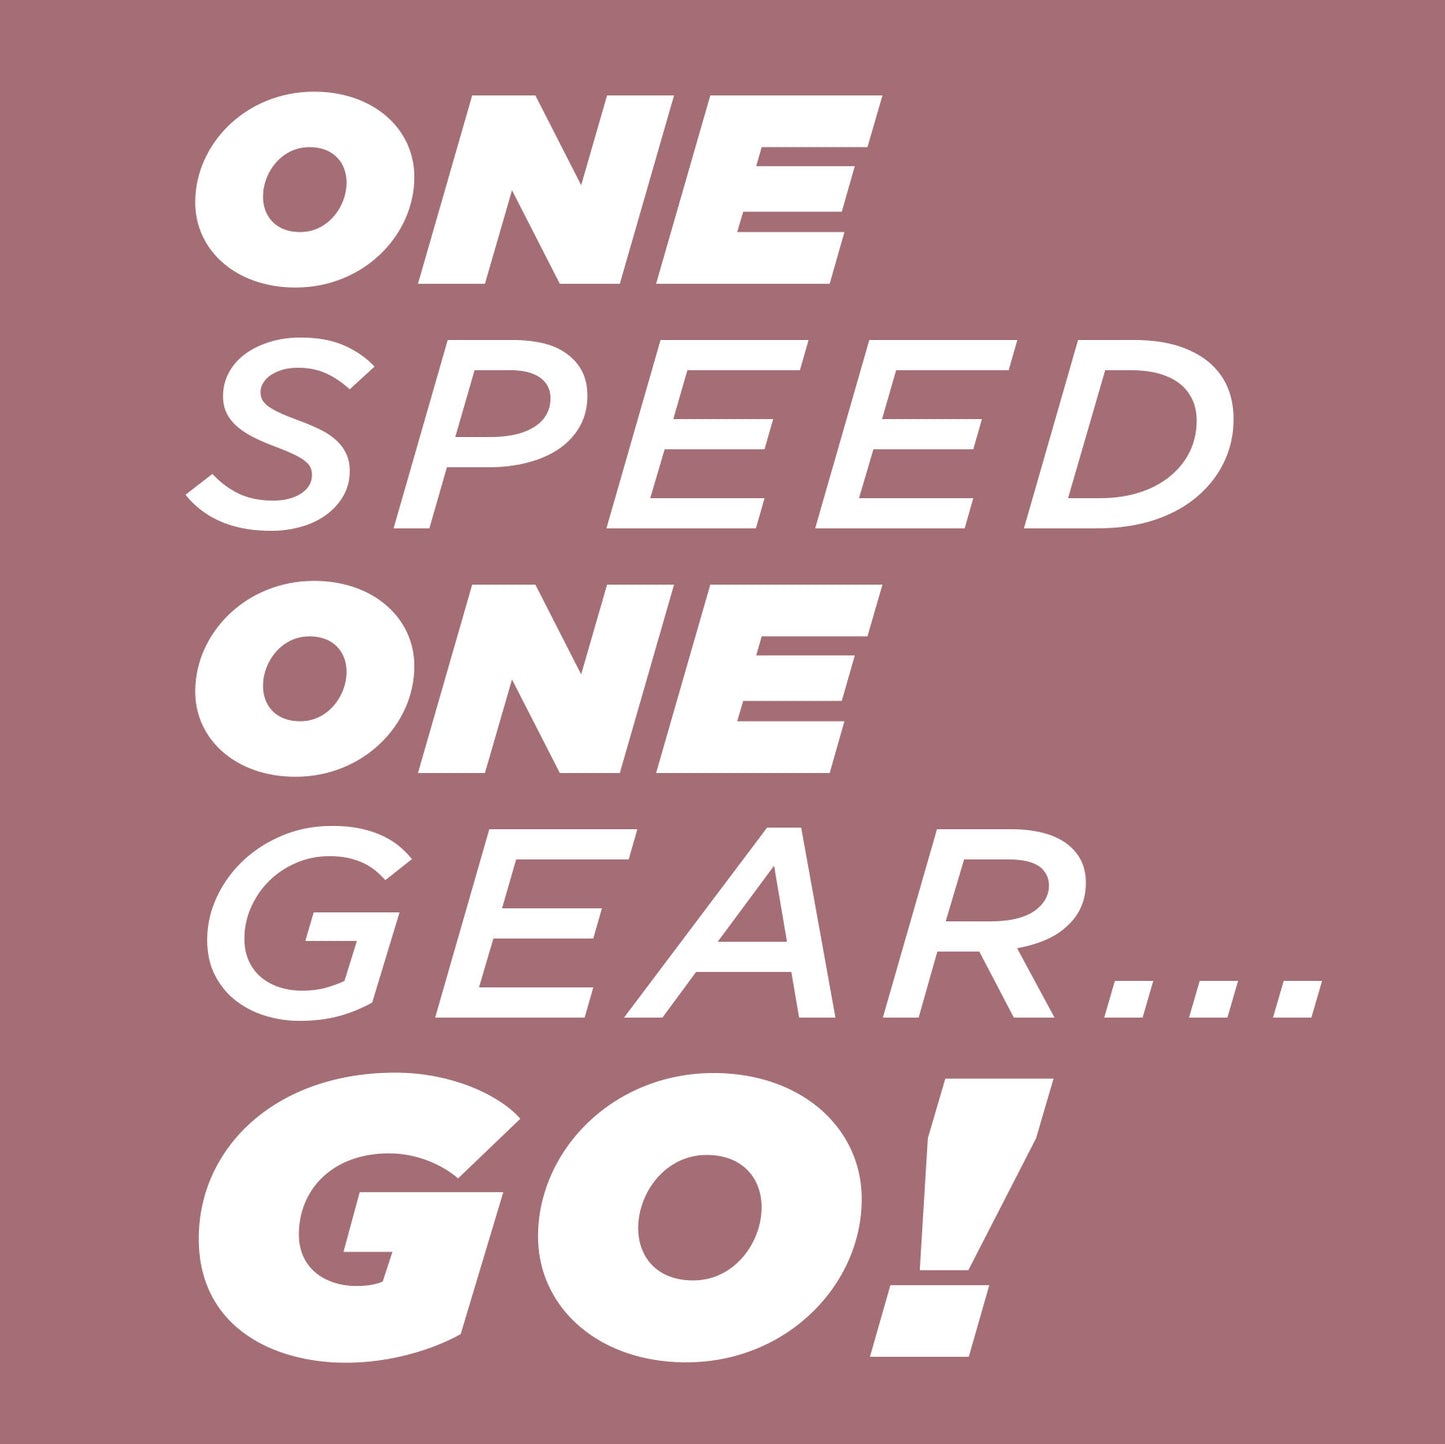 One Speed One Gear Go! Greetings Card (150x150 blank)